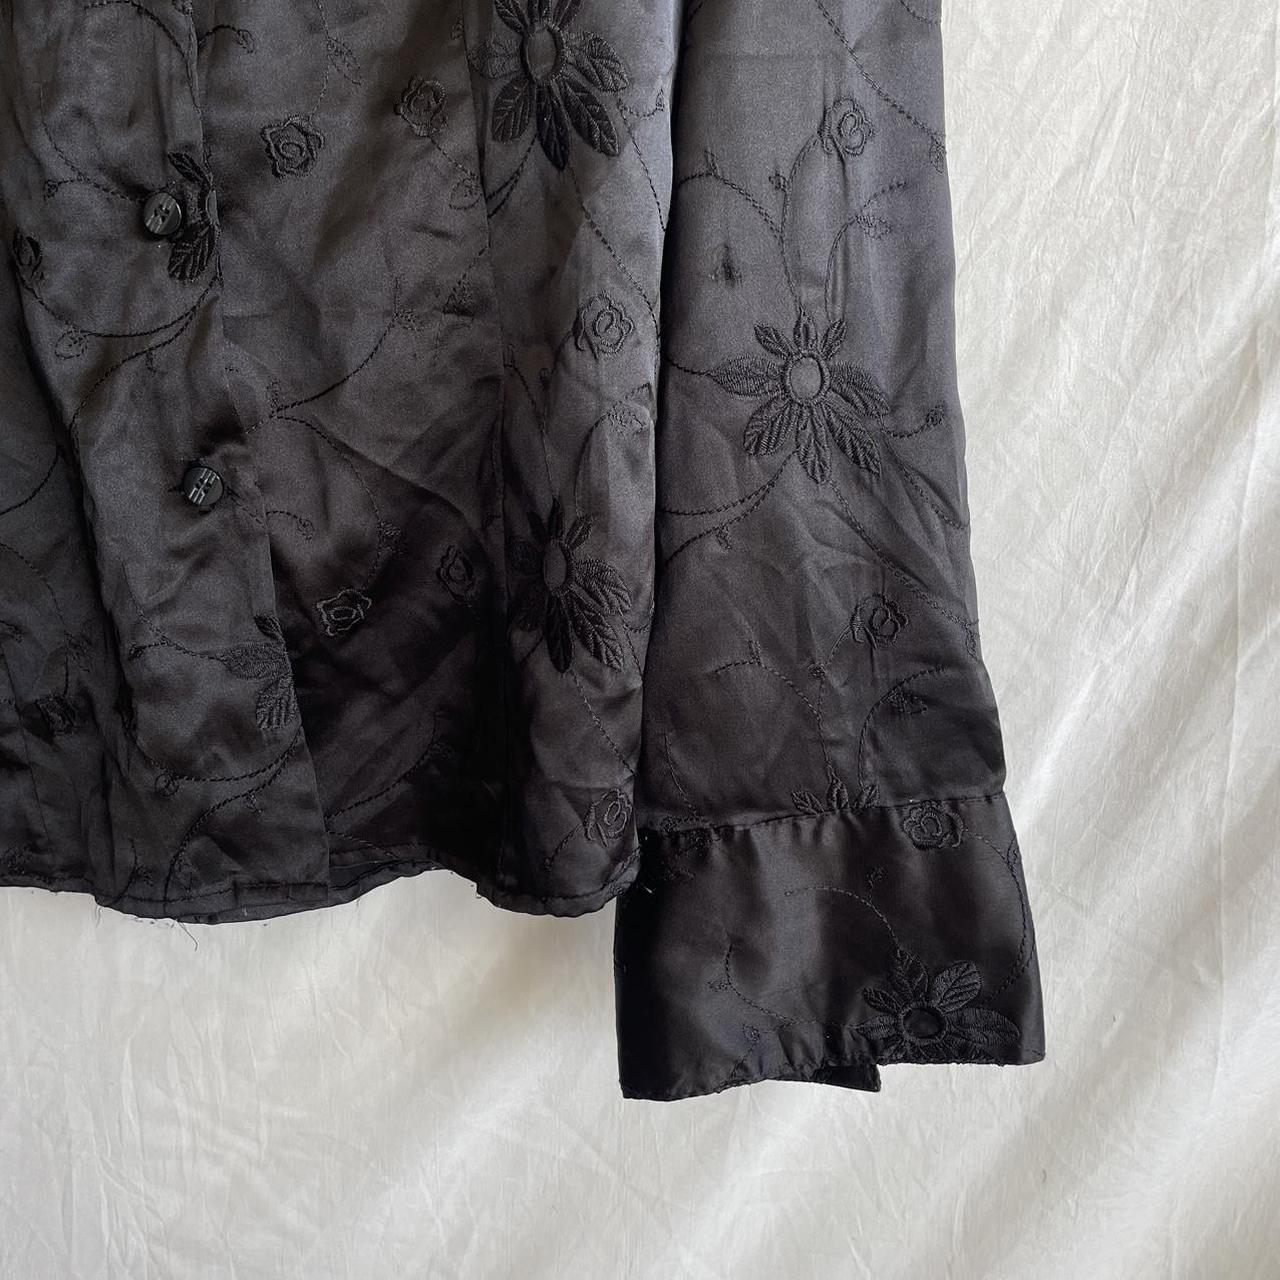 Black Satin Floral Embroidered Blouse Size 2X fits... - Depop